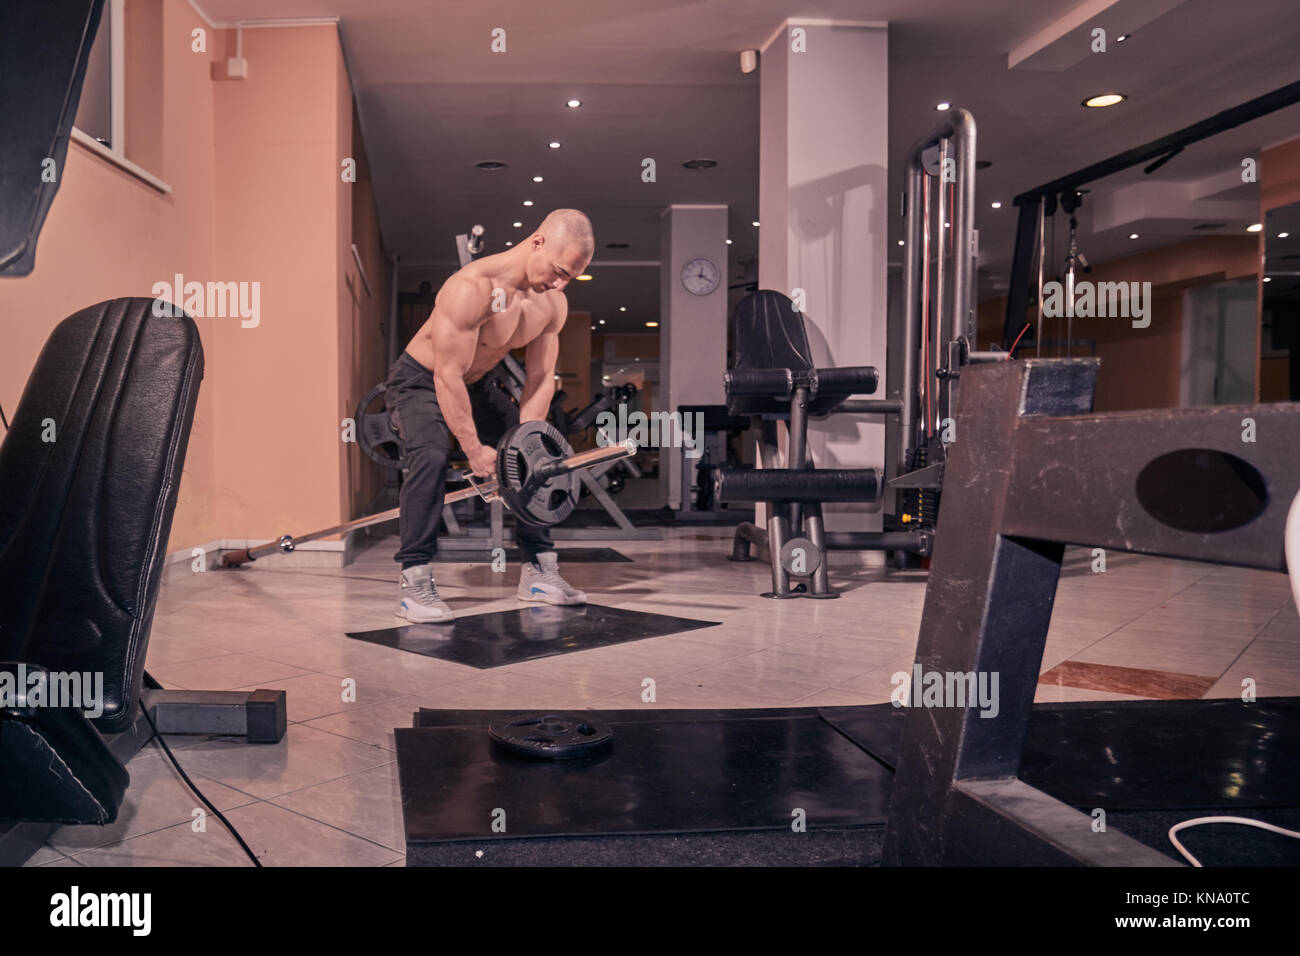 one bodybuilder, exercise T-bar row, gym interior, fitness equipment. Stock Photo